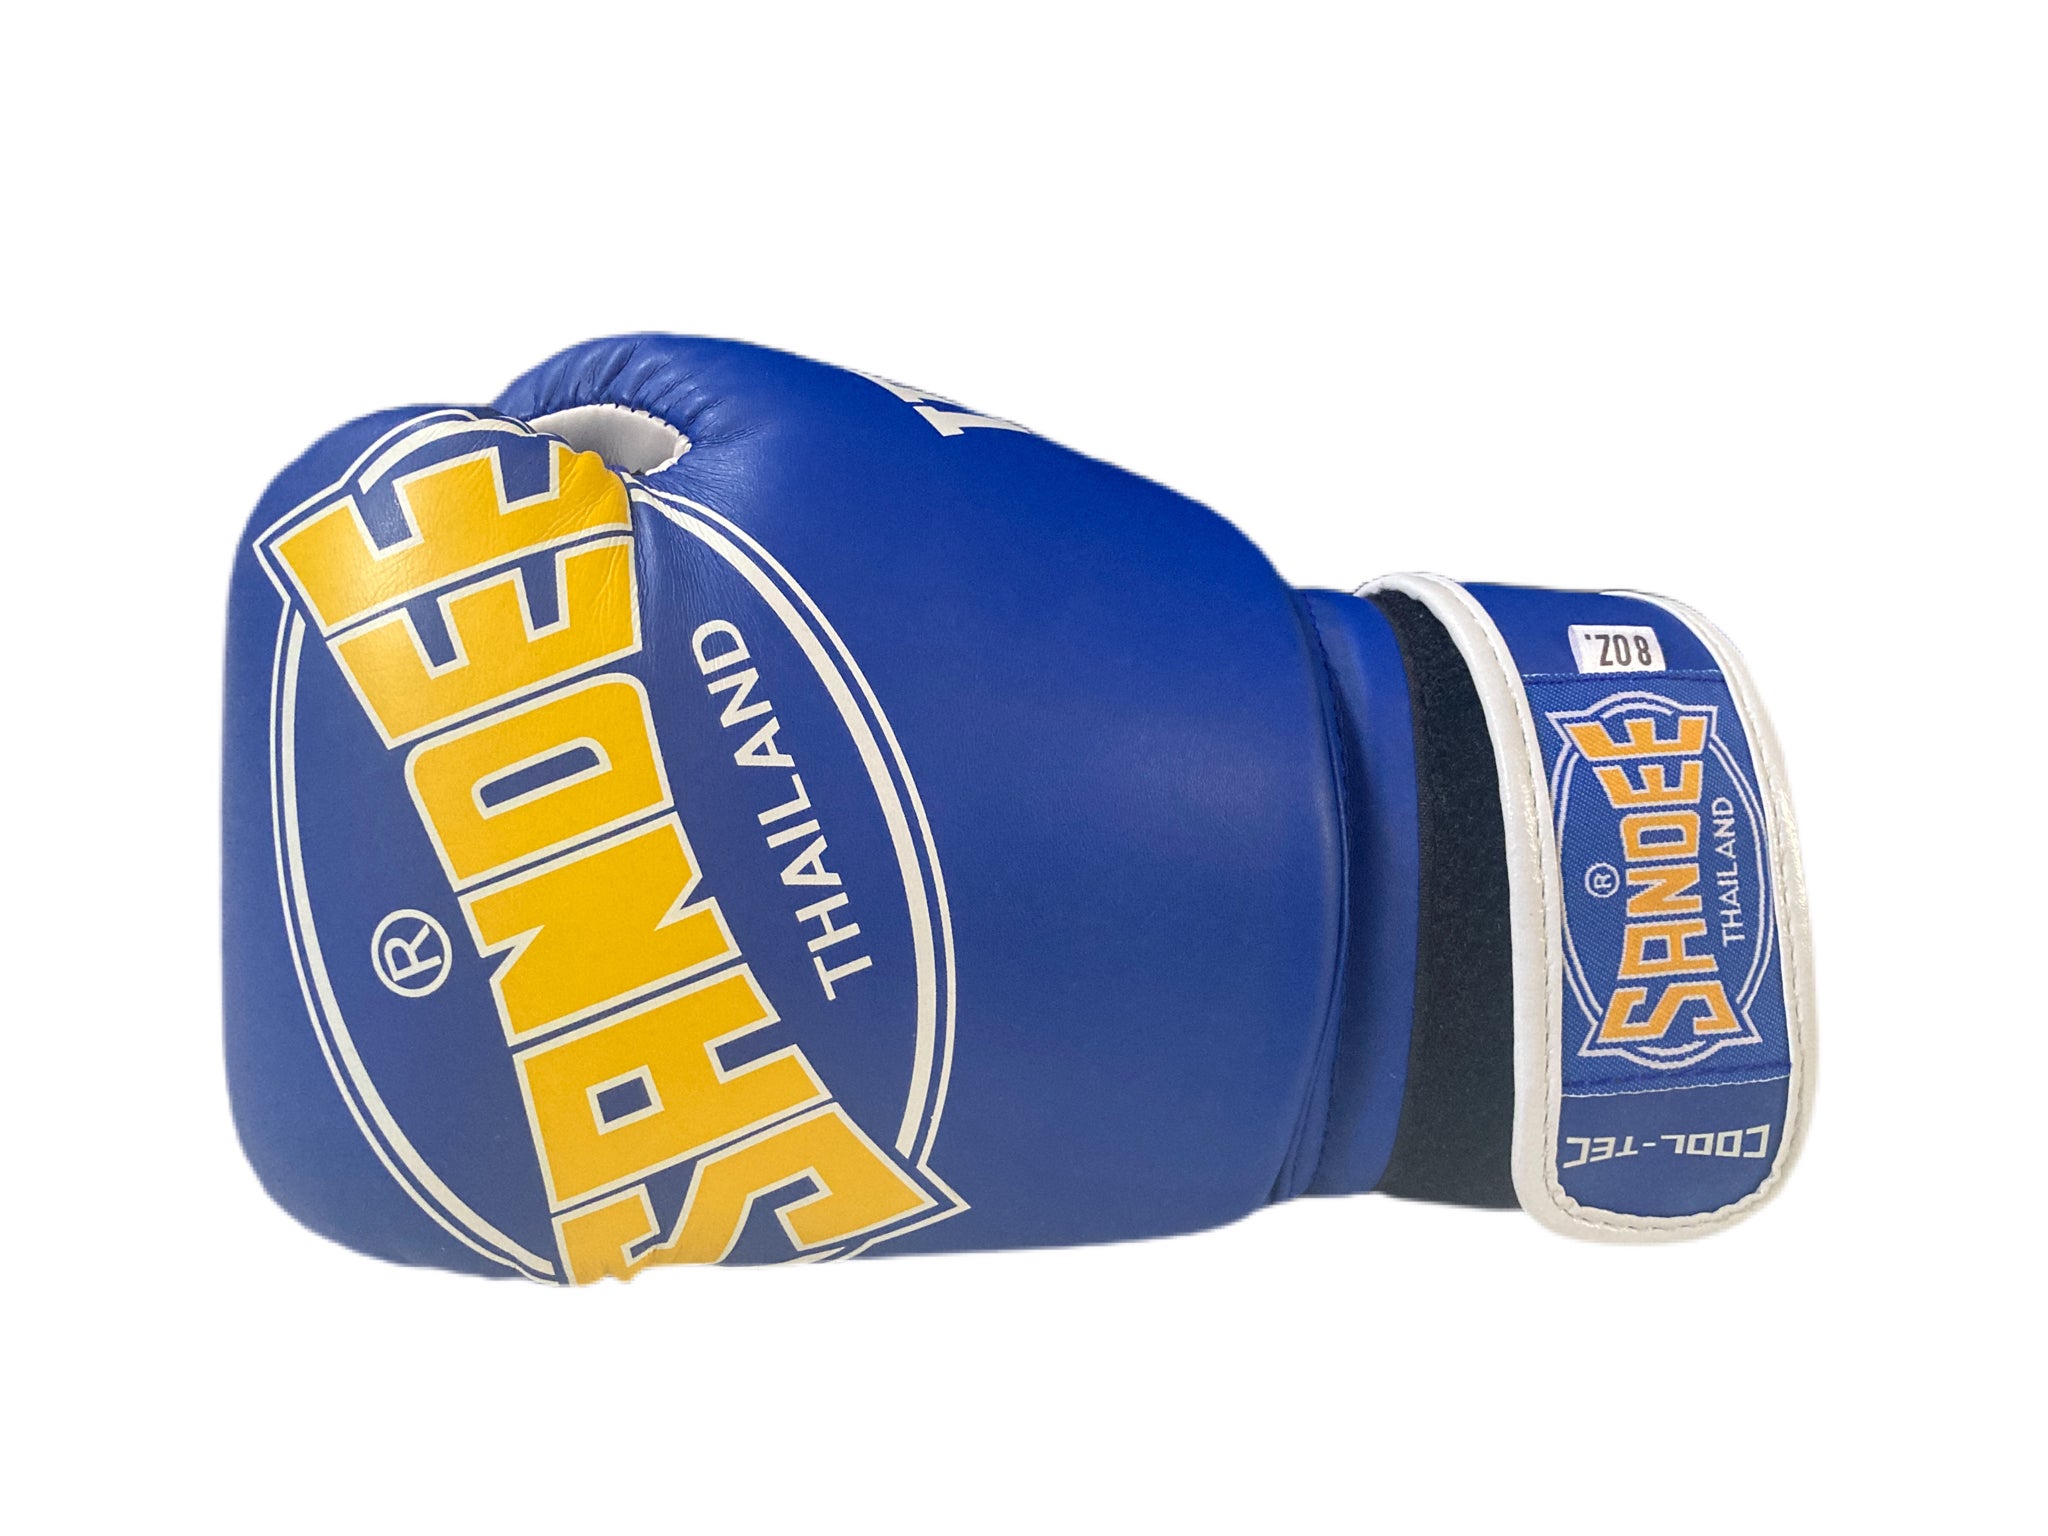 Sandee Cool-Tec Velcro Leather Boxing Gloves.jpg